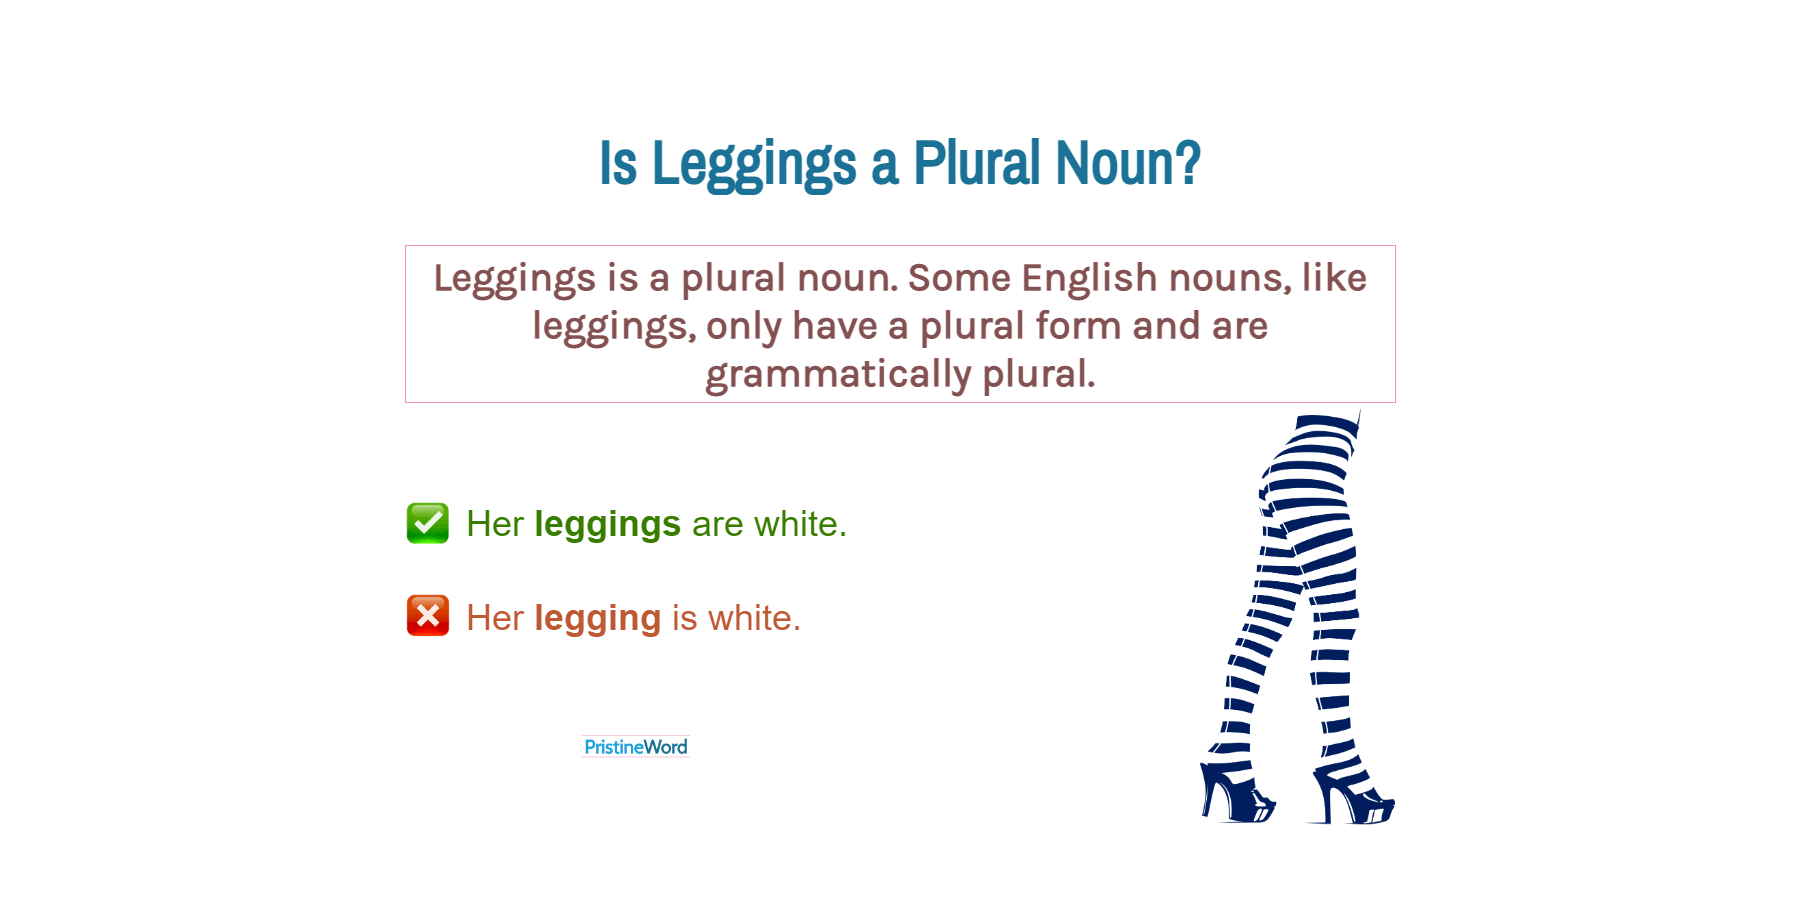 Is Leggings a Plural Noun?